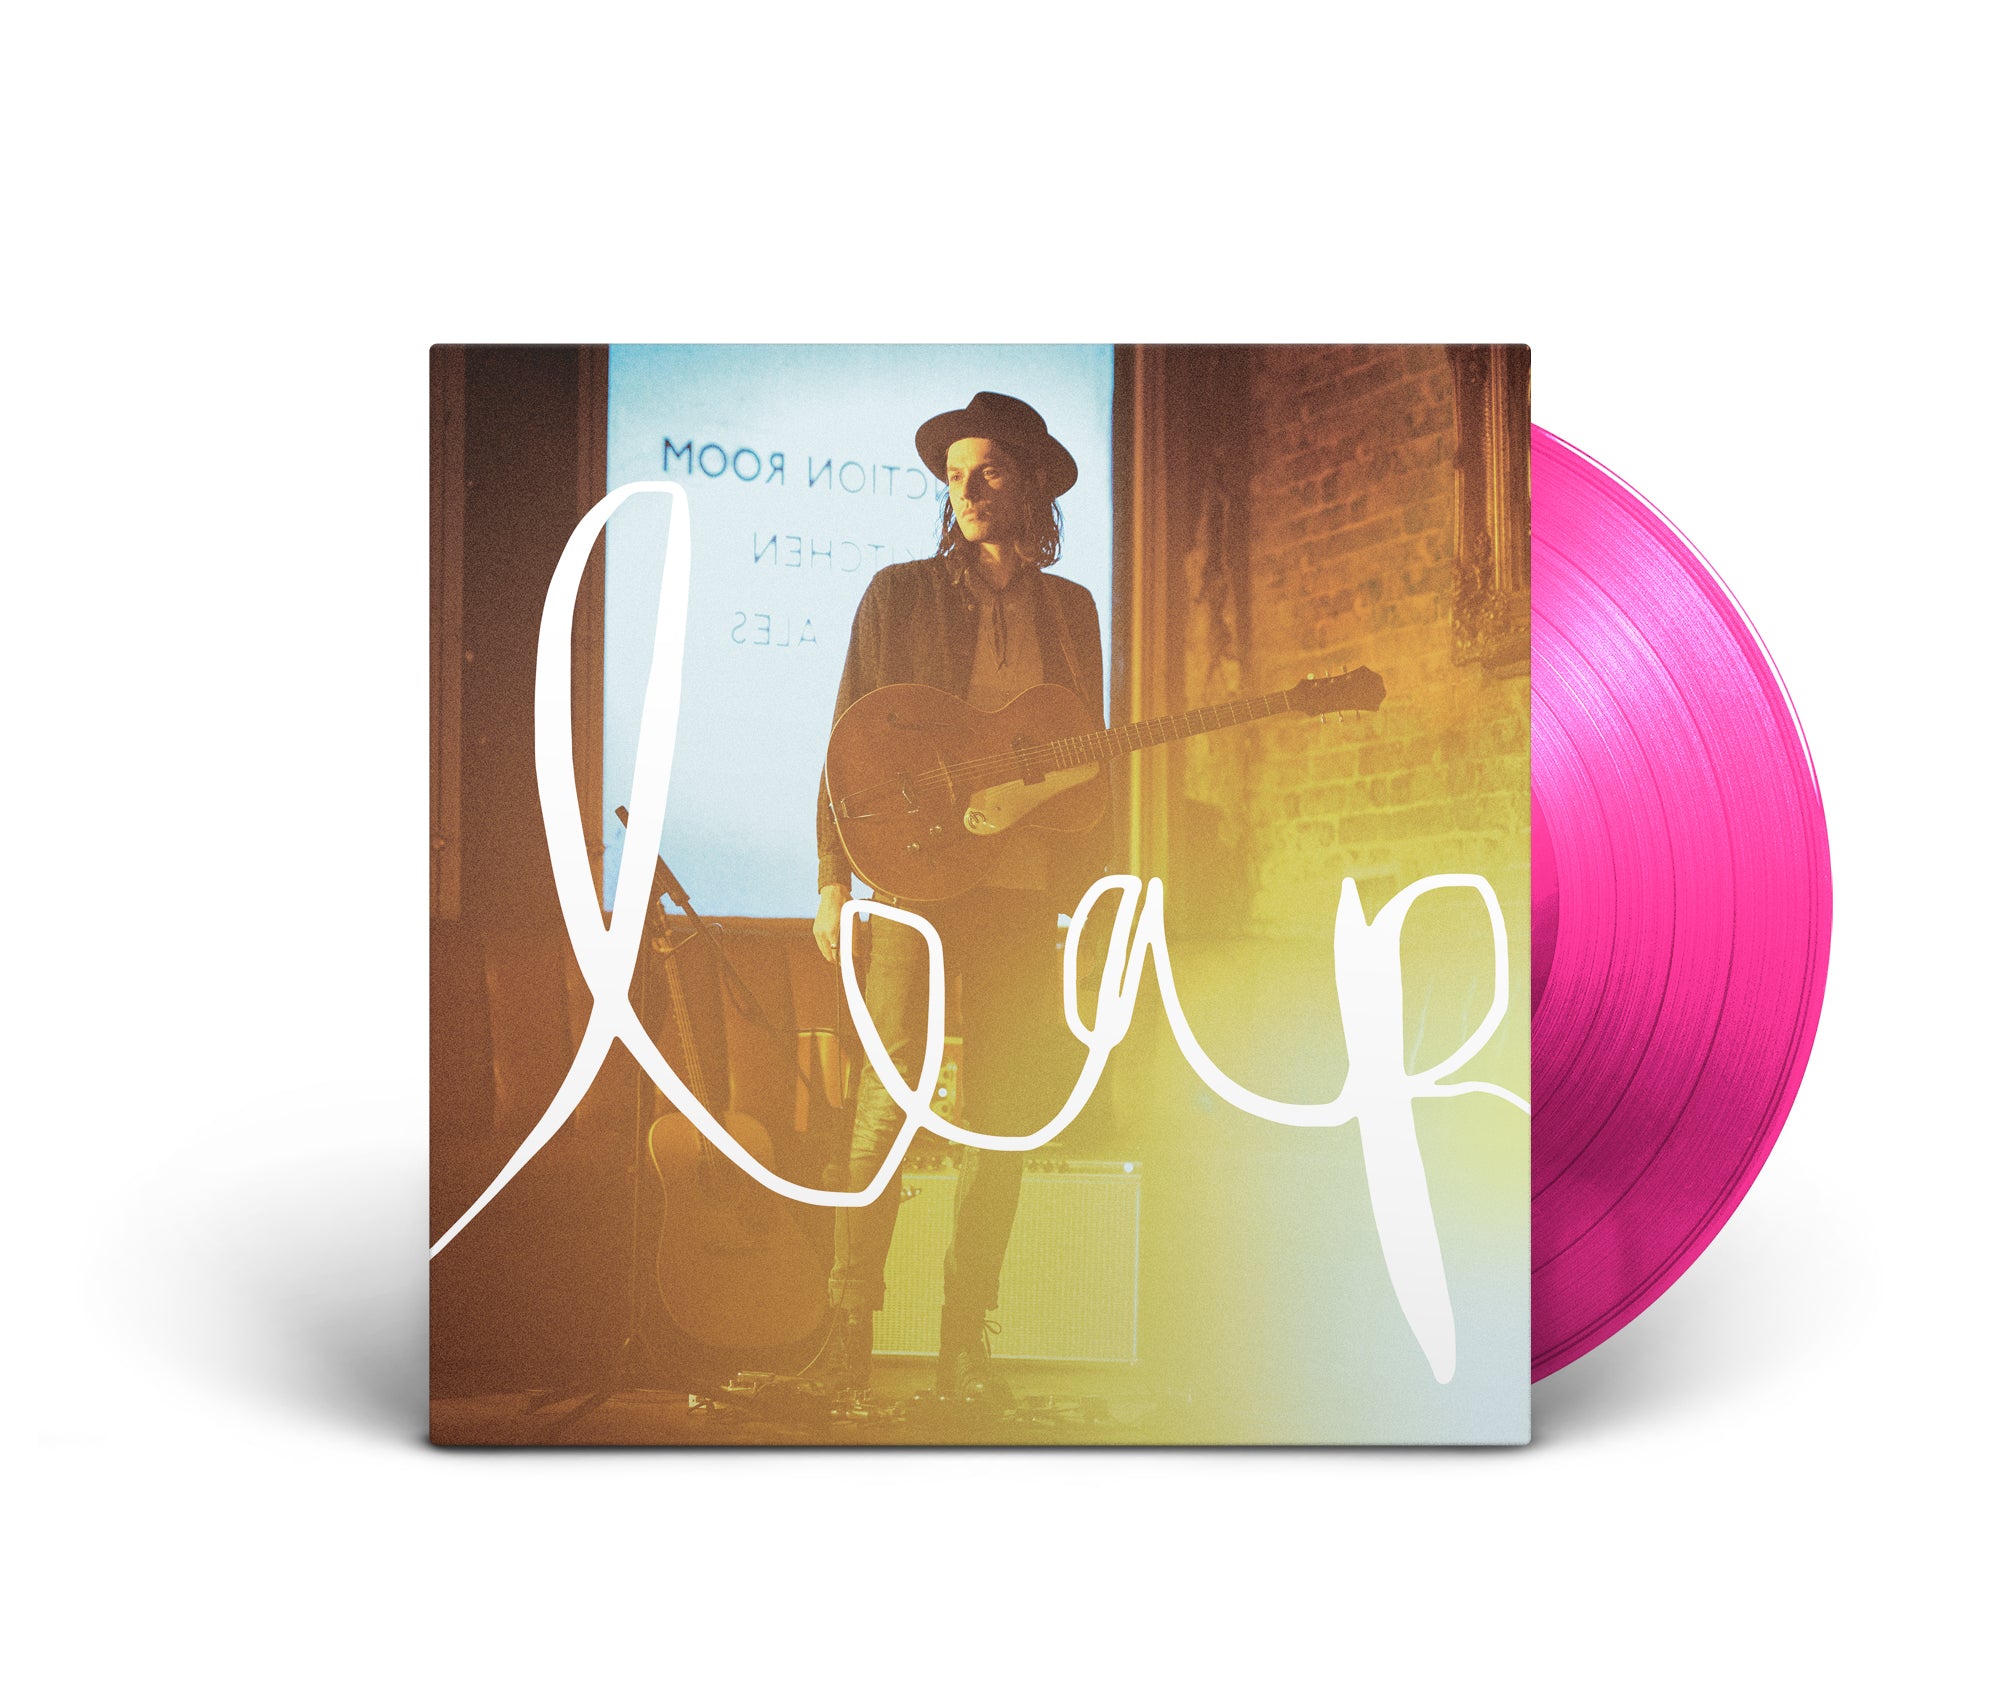 James Bay - Leap (Pink Vinyl)